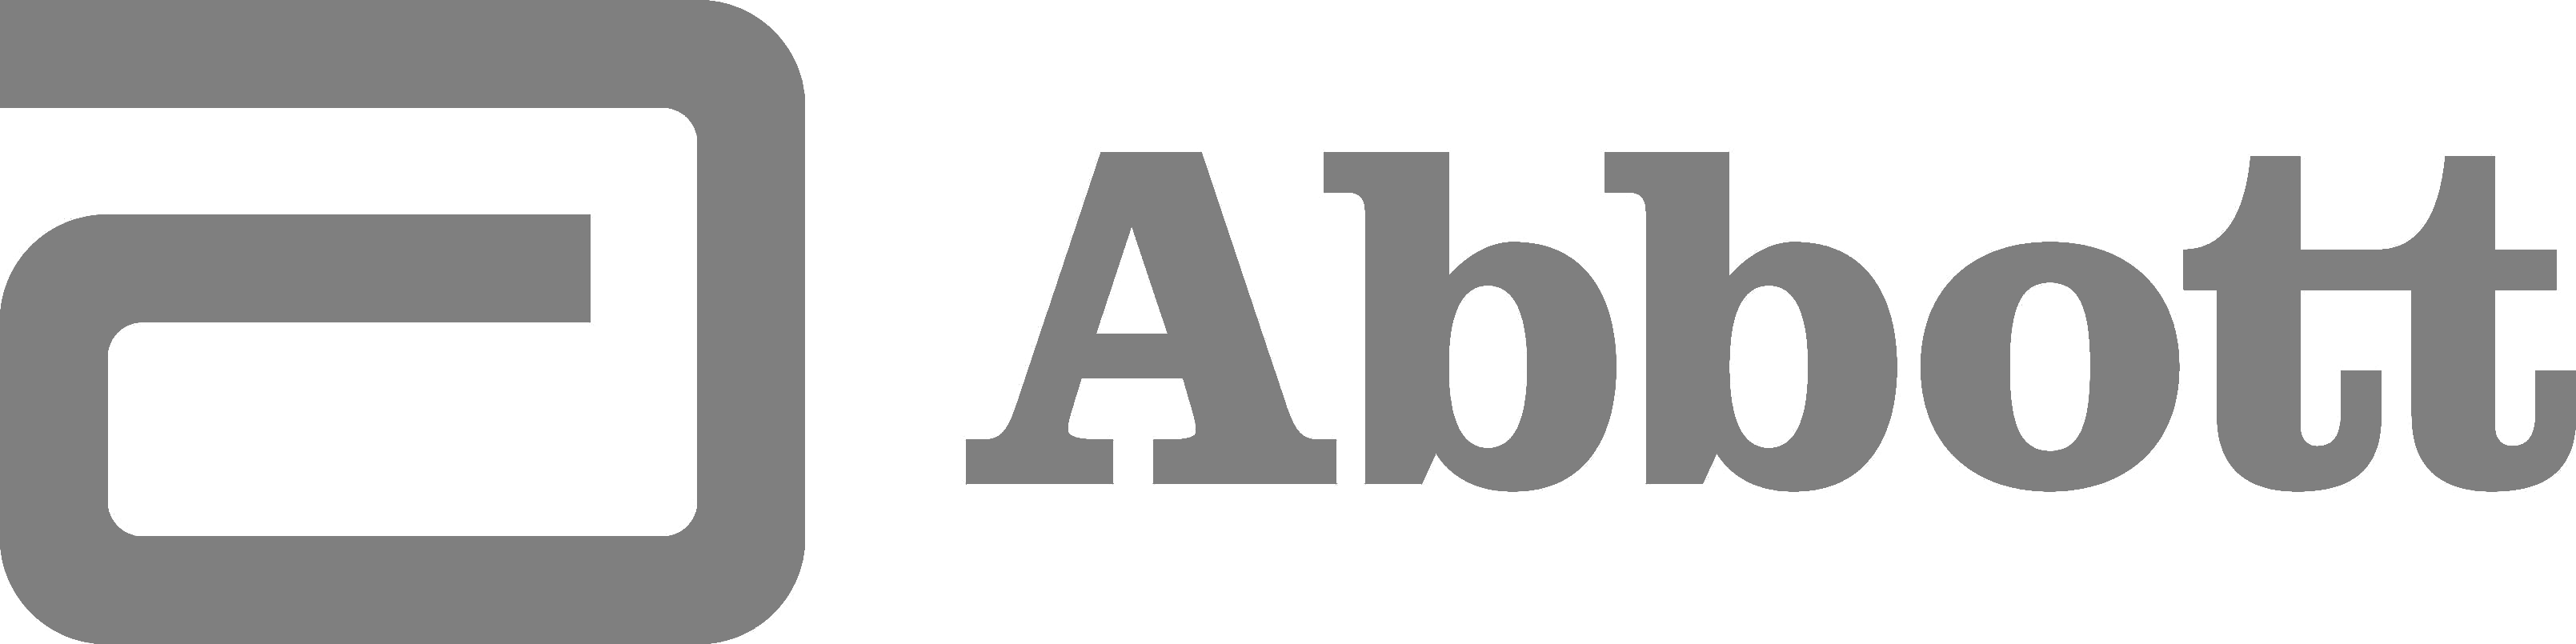 abbot-logo